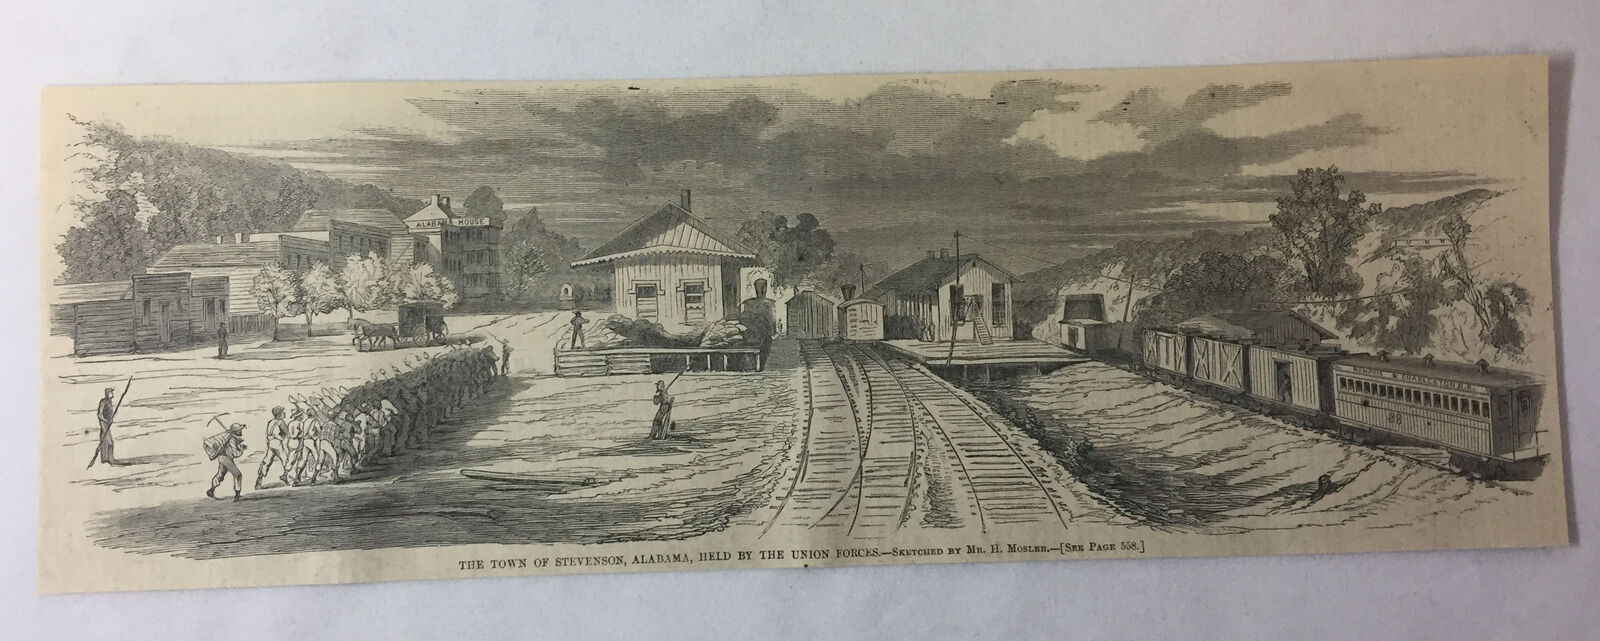 1862 magazine engraving~ TOWN OF STEVENSON, ALABAMA ~Civil War